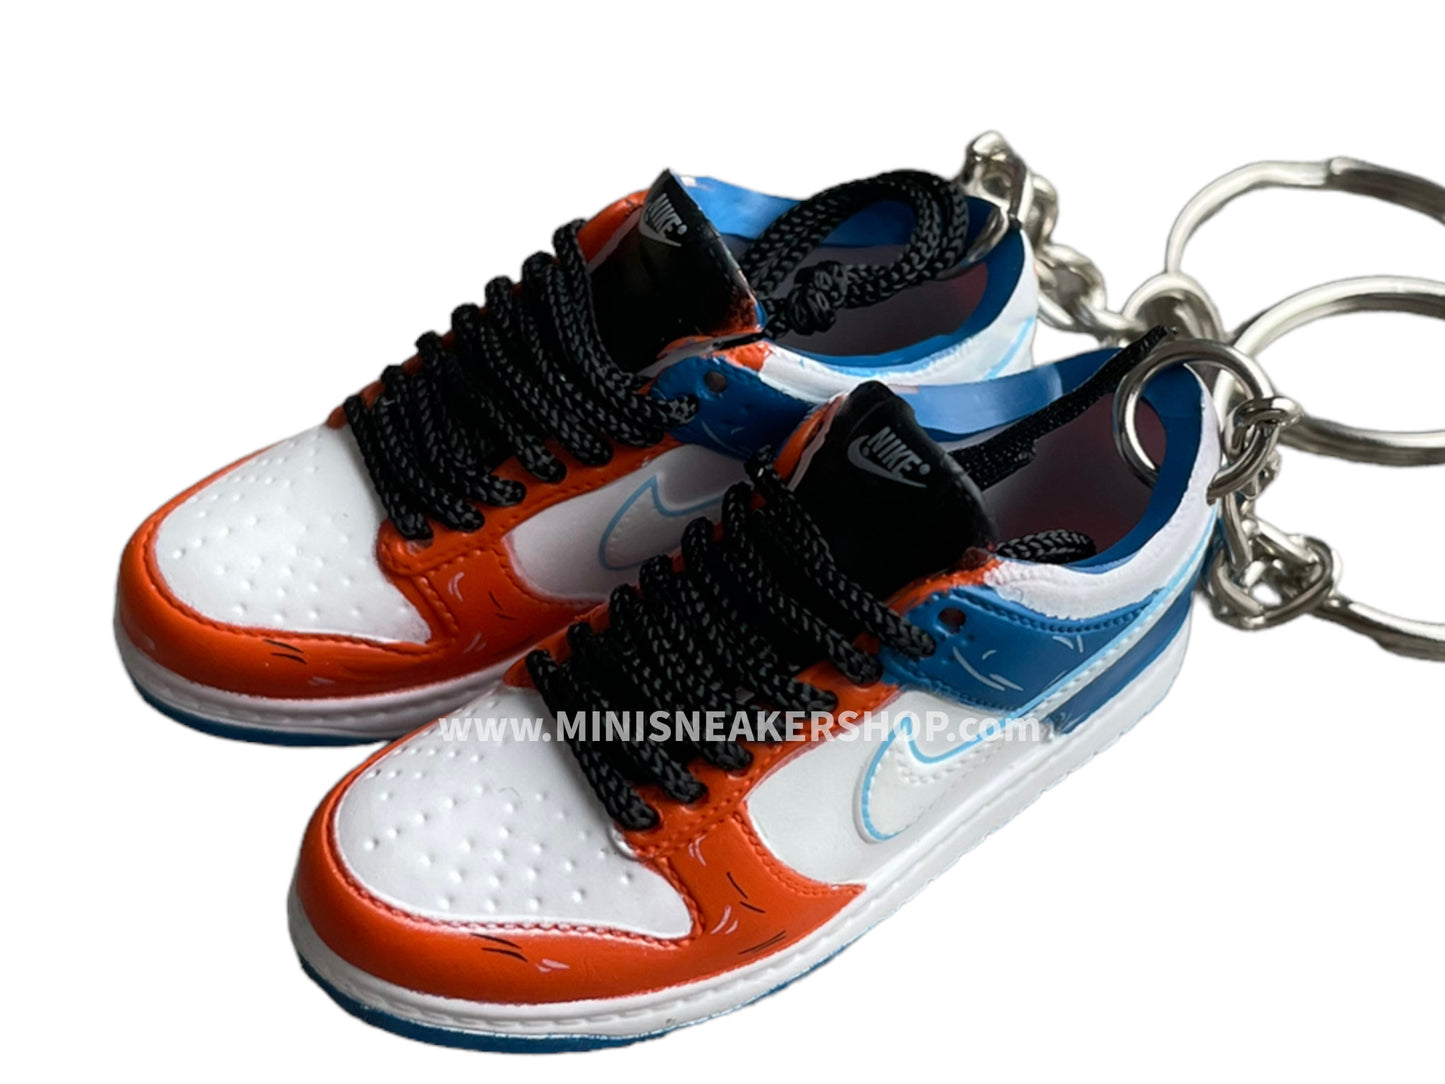 Mini sneaker keychain 3D Dunk - Blue White Red